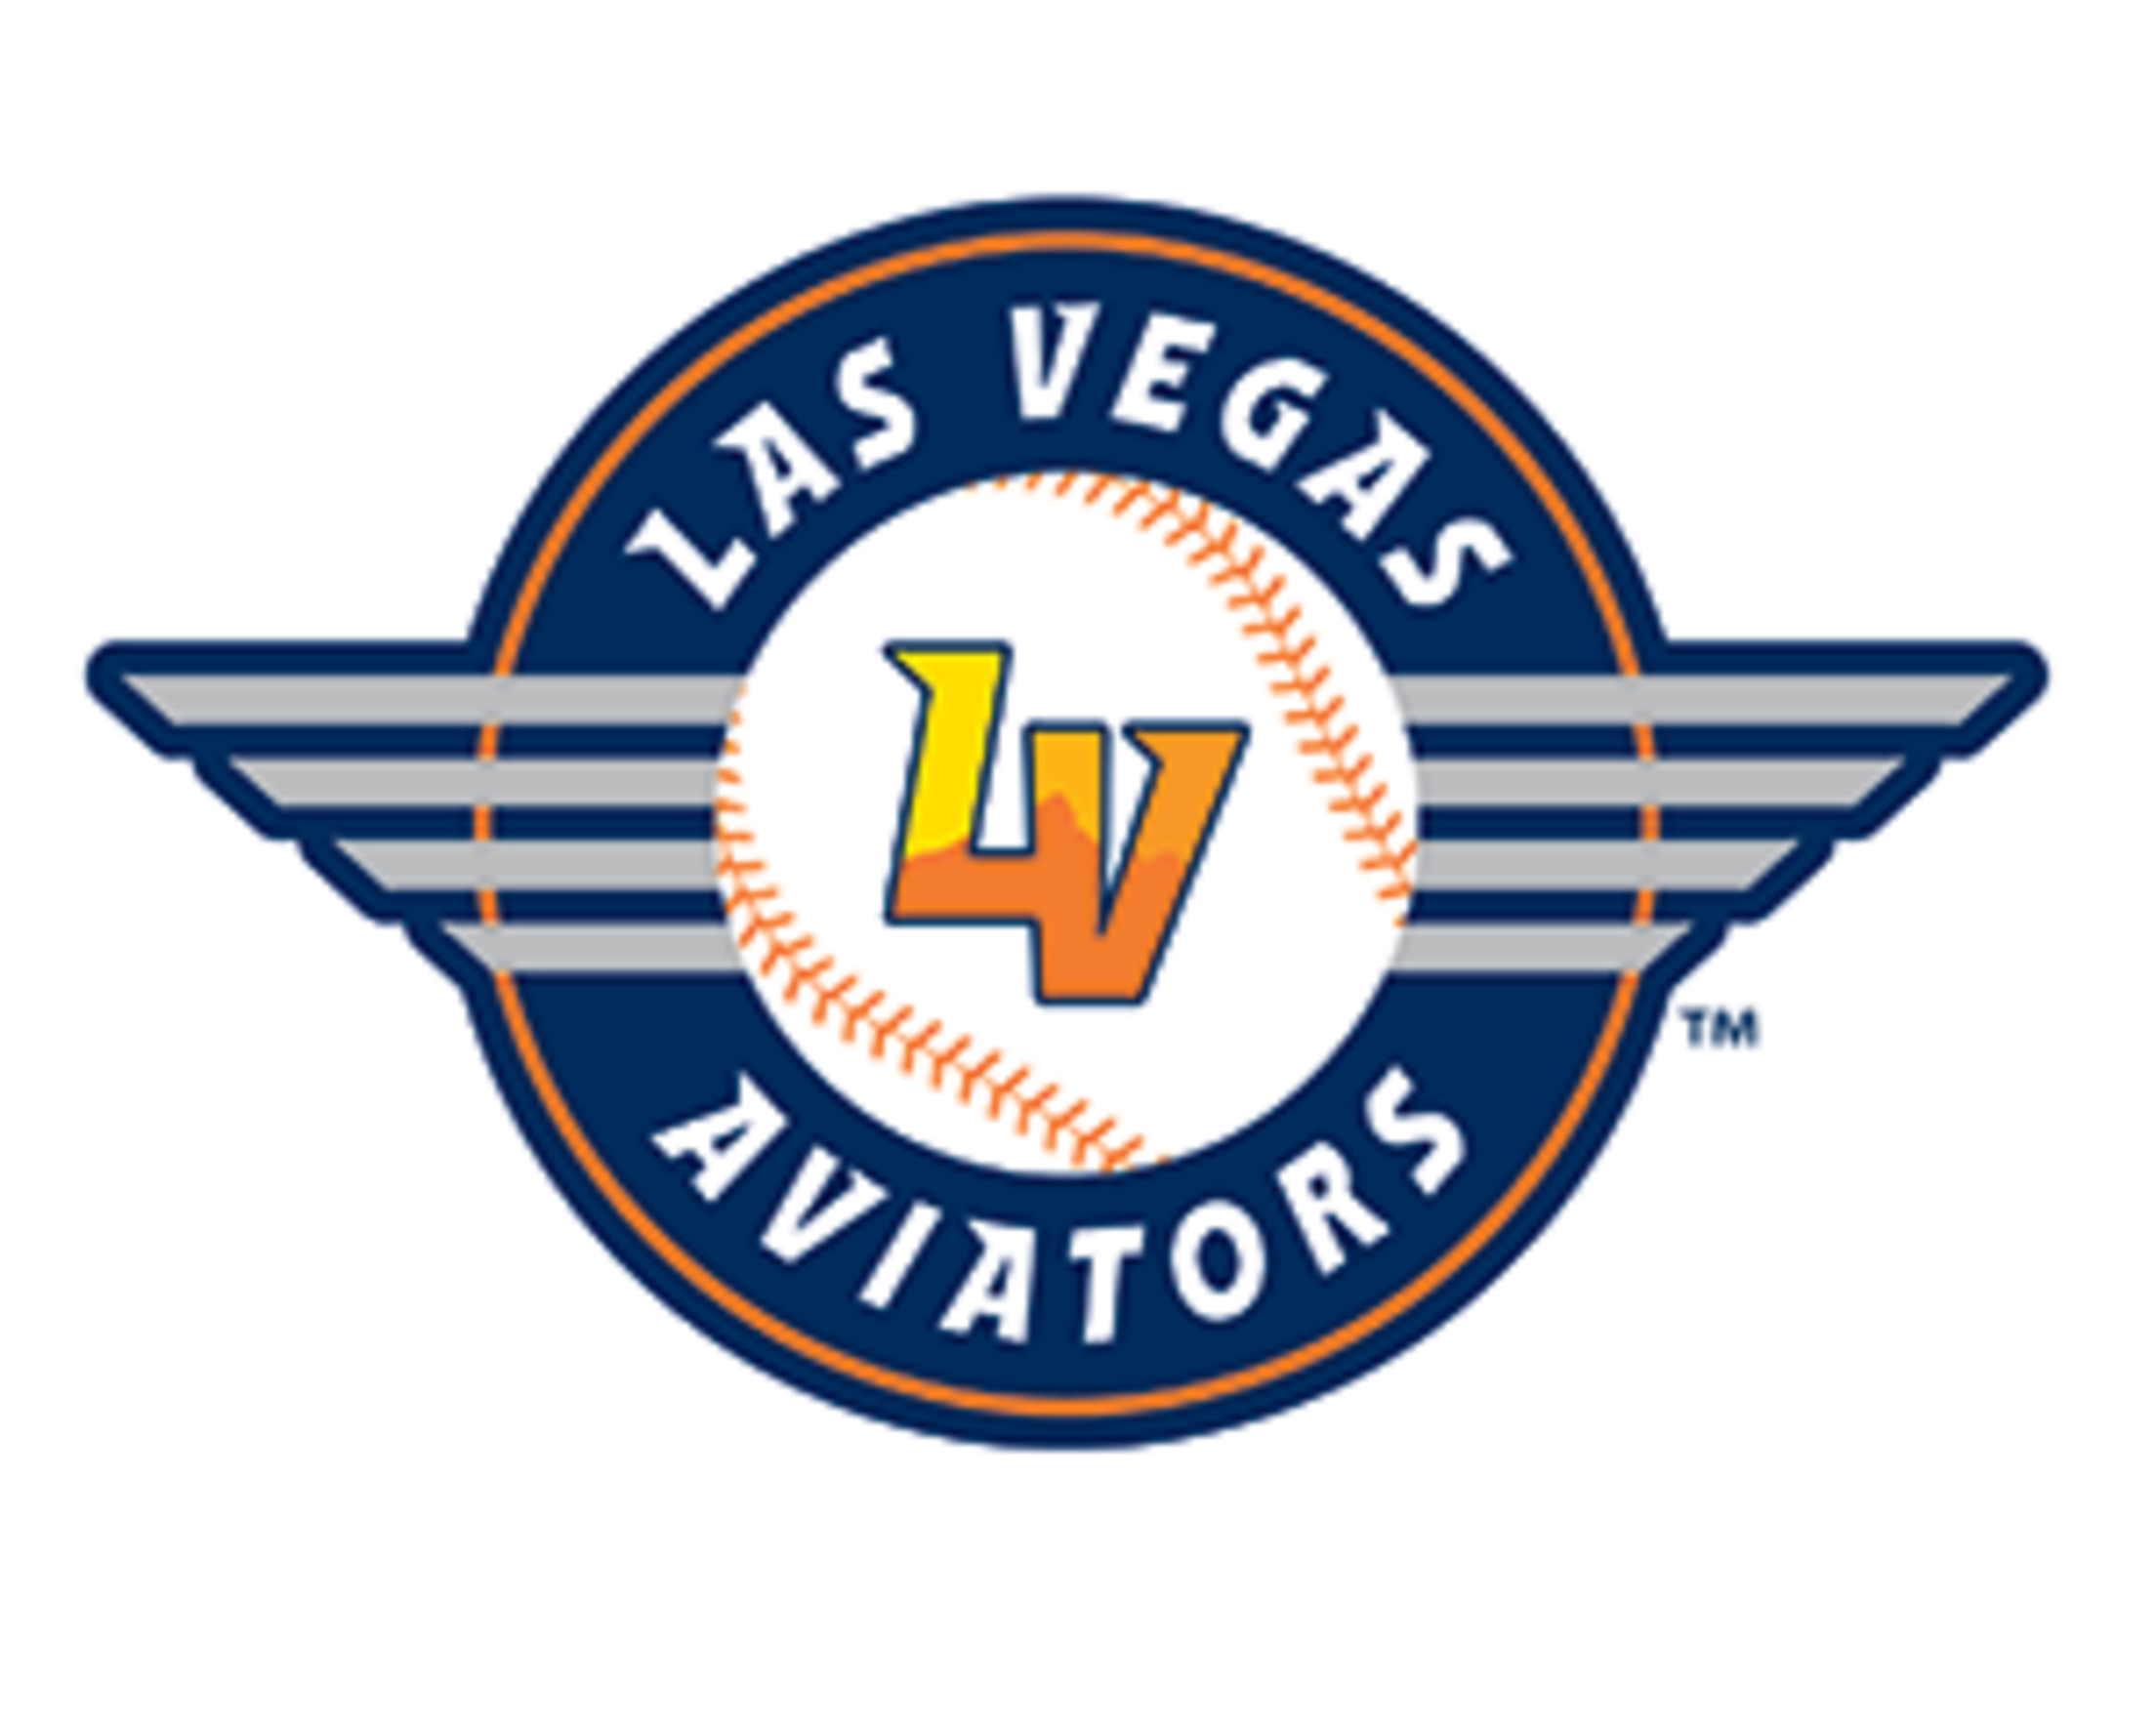 Brand New: New Name and Logo for Las Vegas Aviators